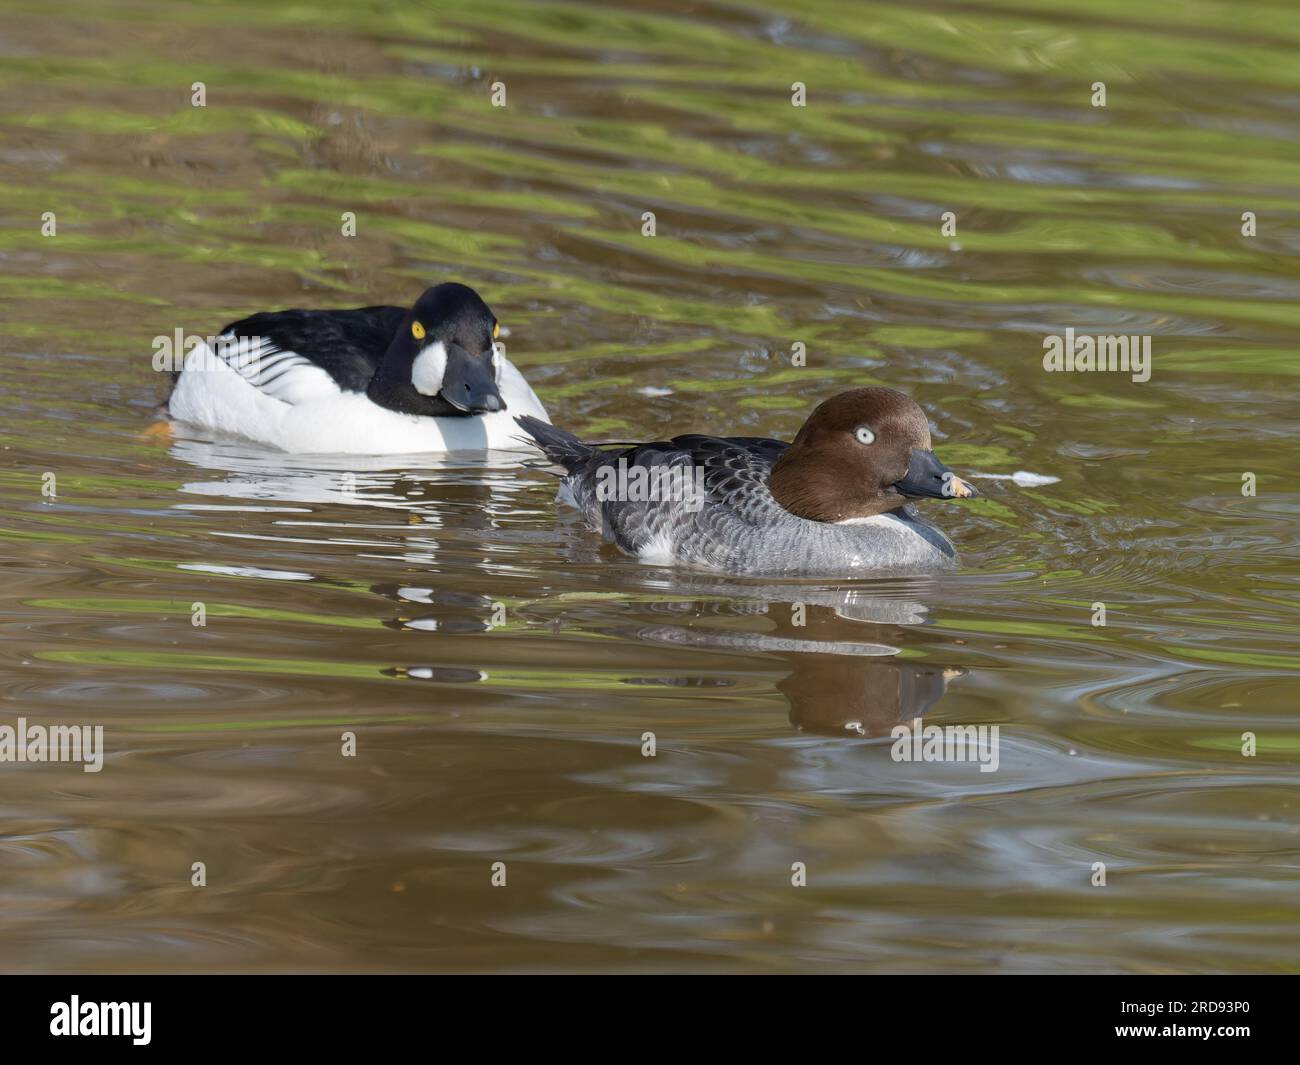 A pair of common goldeneye ducks, Bucephala clangula, swimming of a pond. Stock Photo